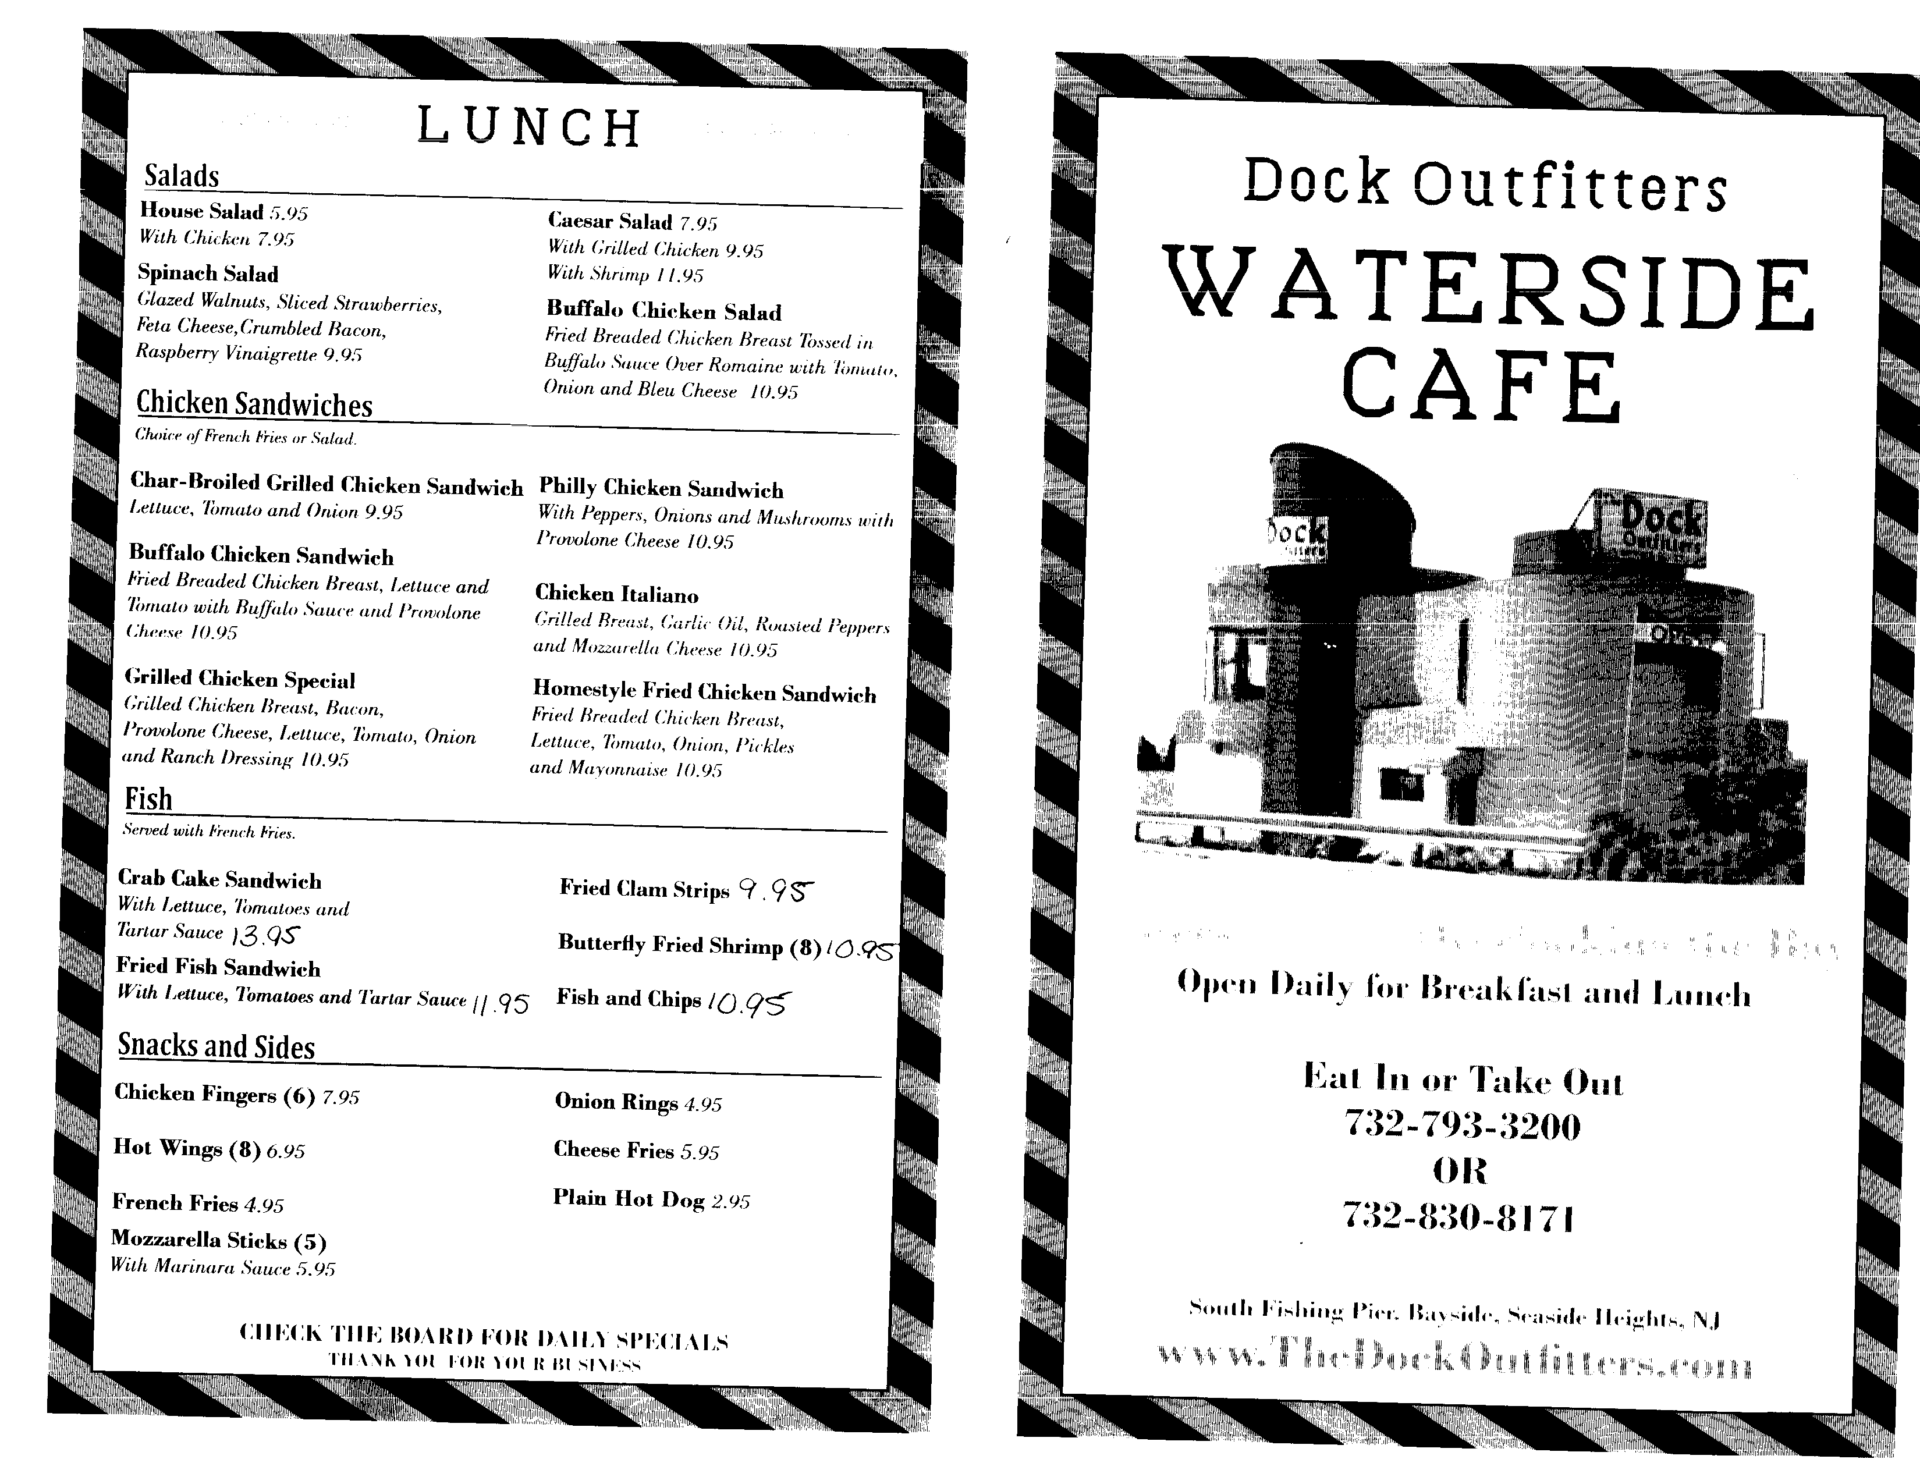 The Waterside Café menu